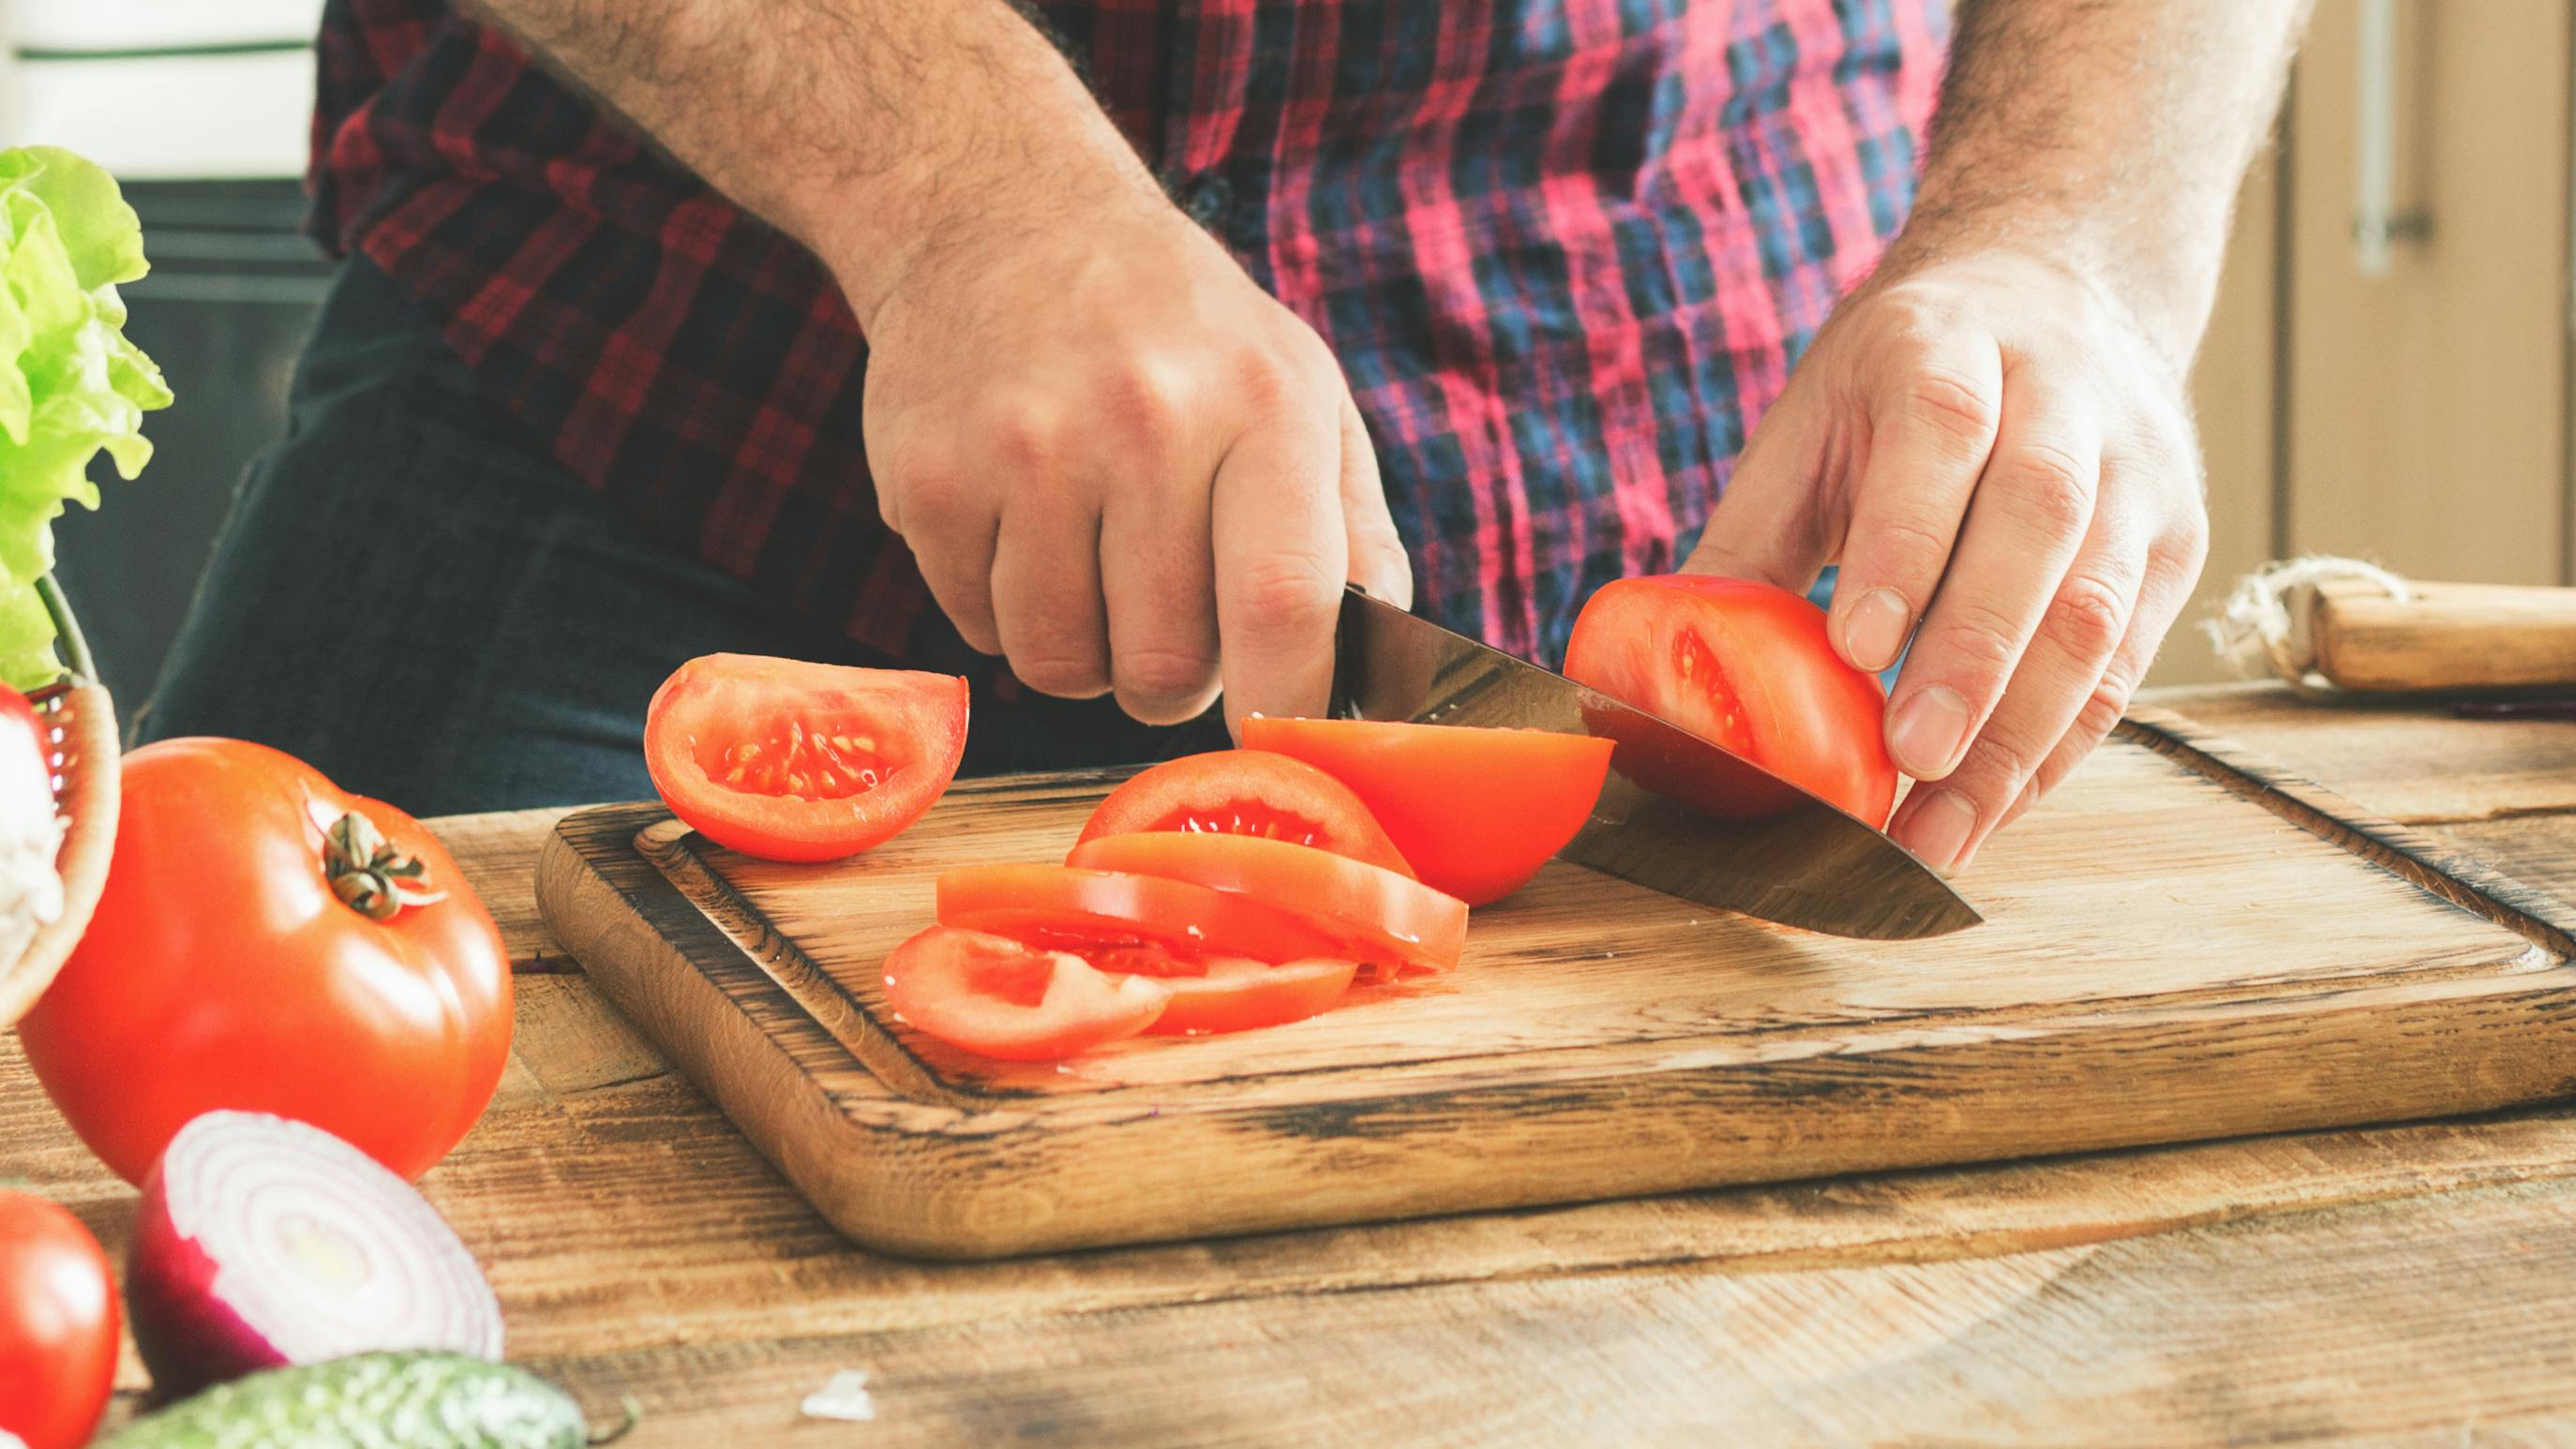 A man cutting a tomato on a cutting board.